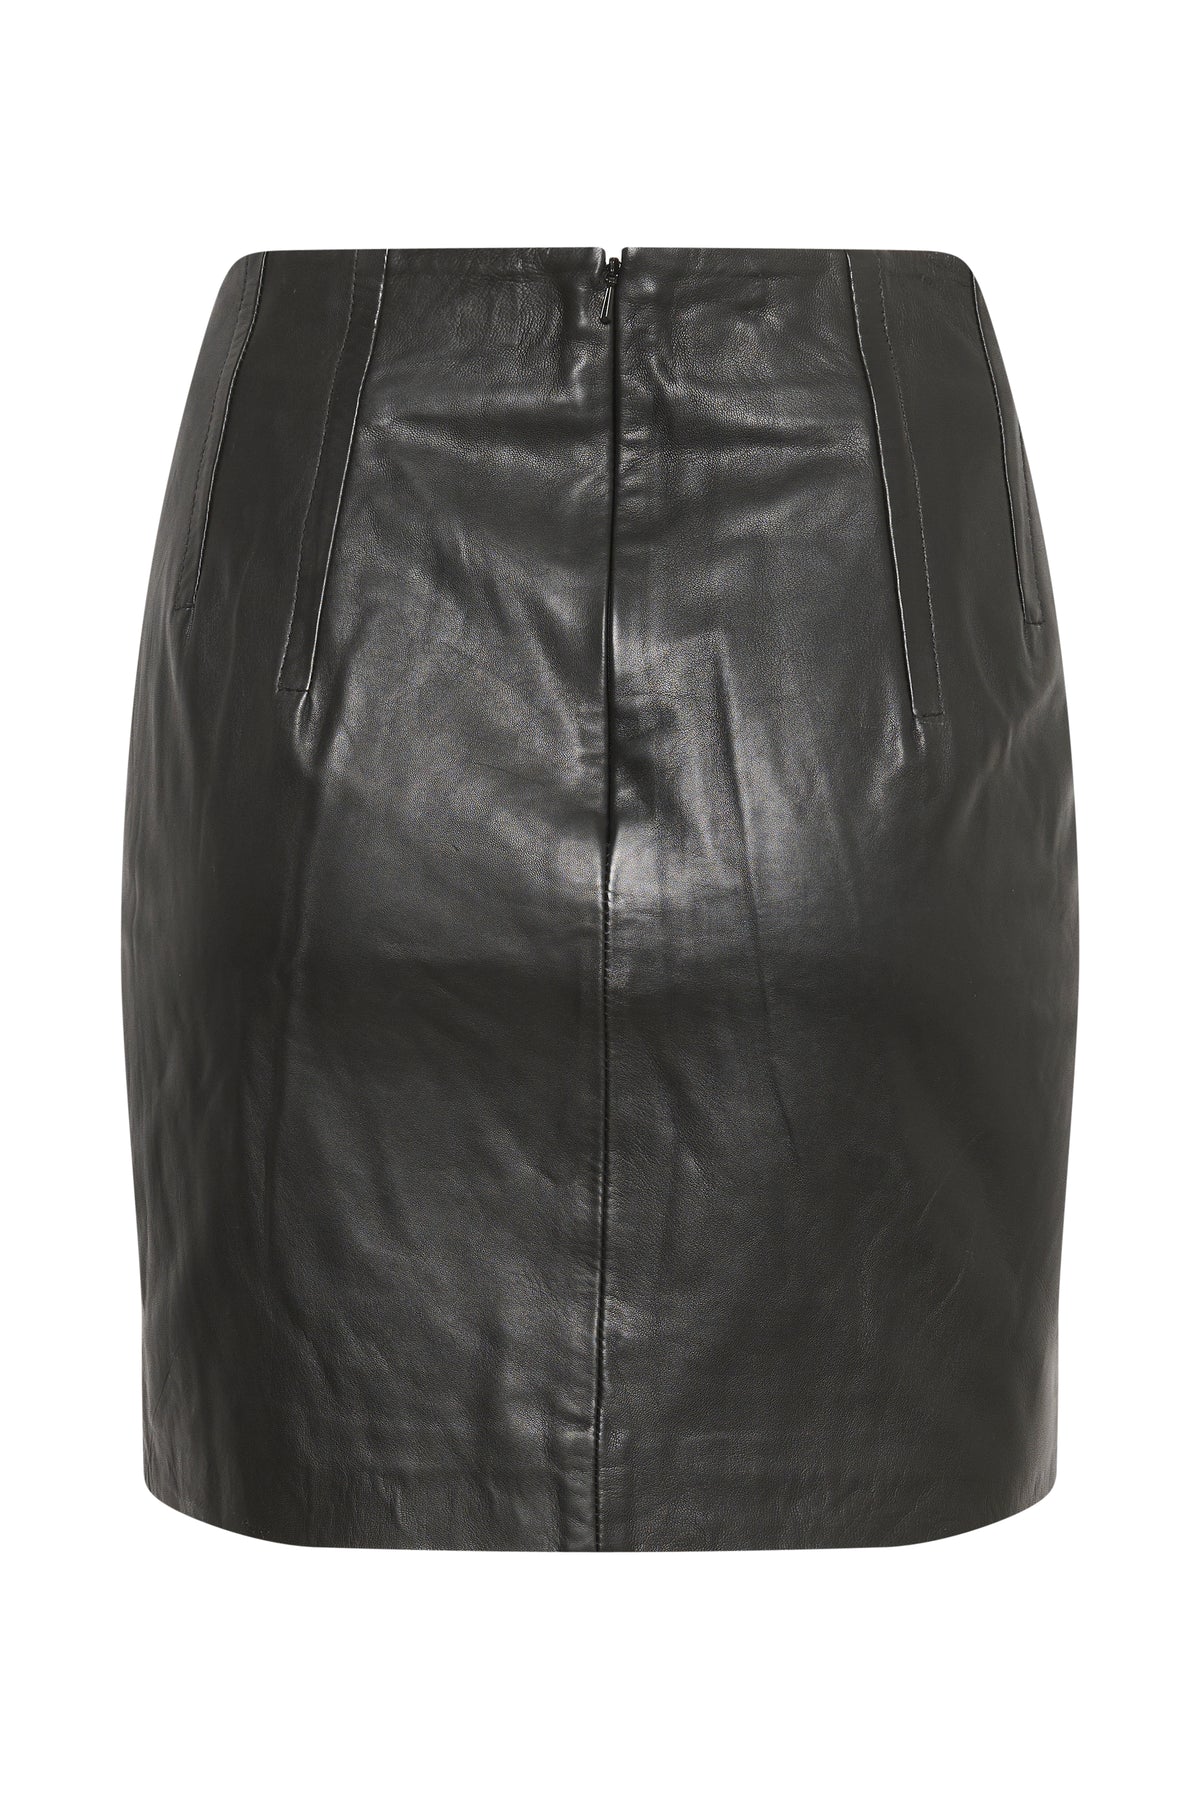 InWear Zander Black Leather Skirt, 30108842